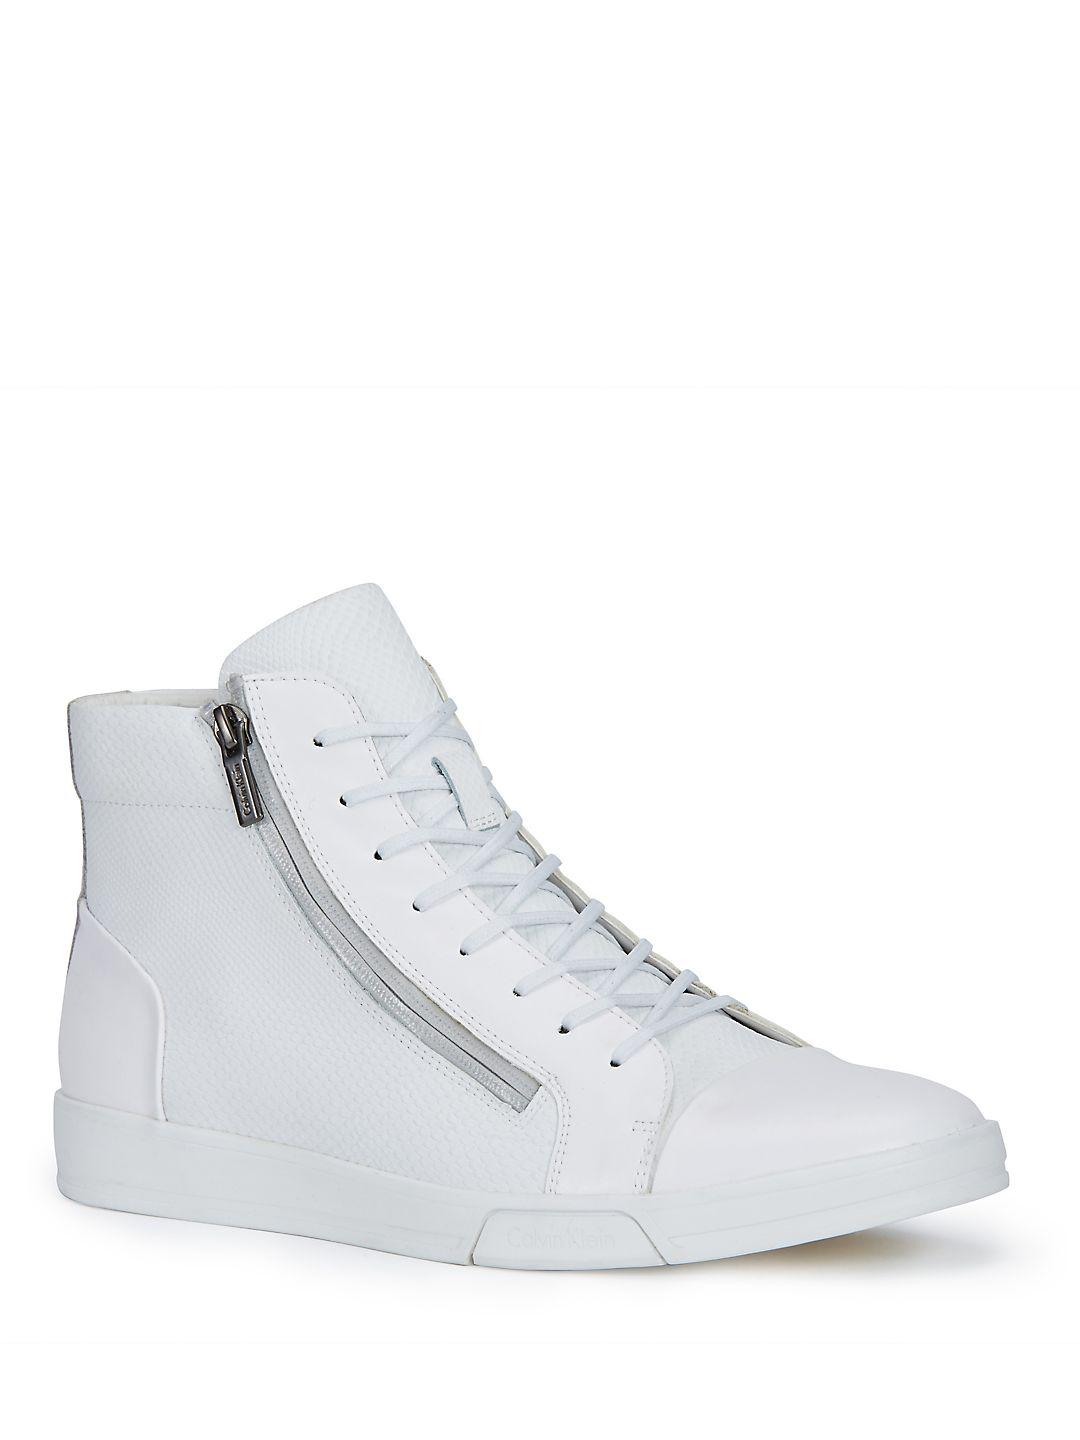 Calvin Klein Berke Embossed Leather Sneakers in White for Men | Lyst